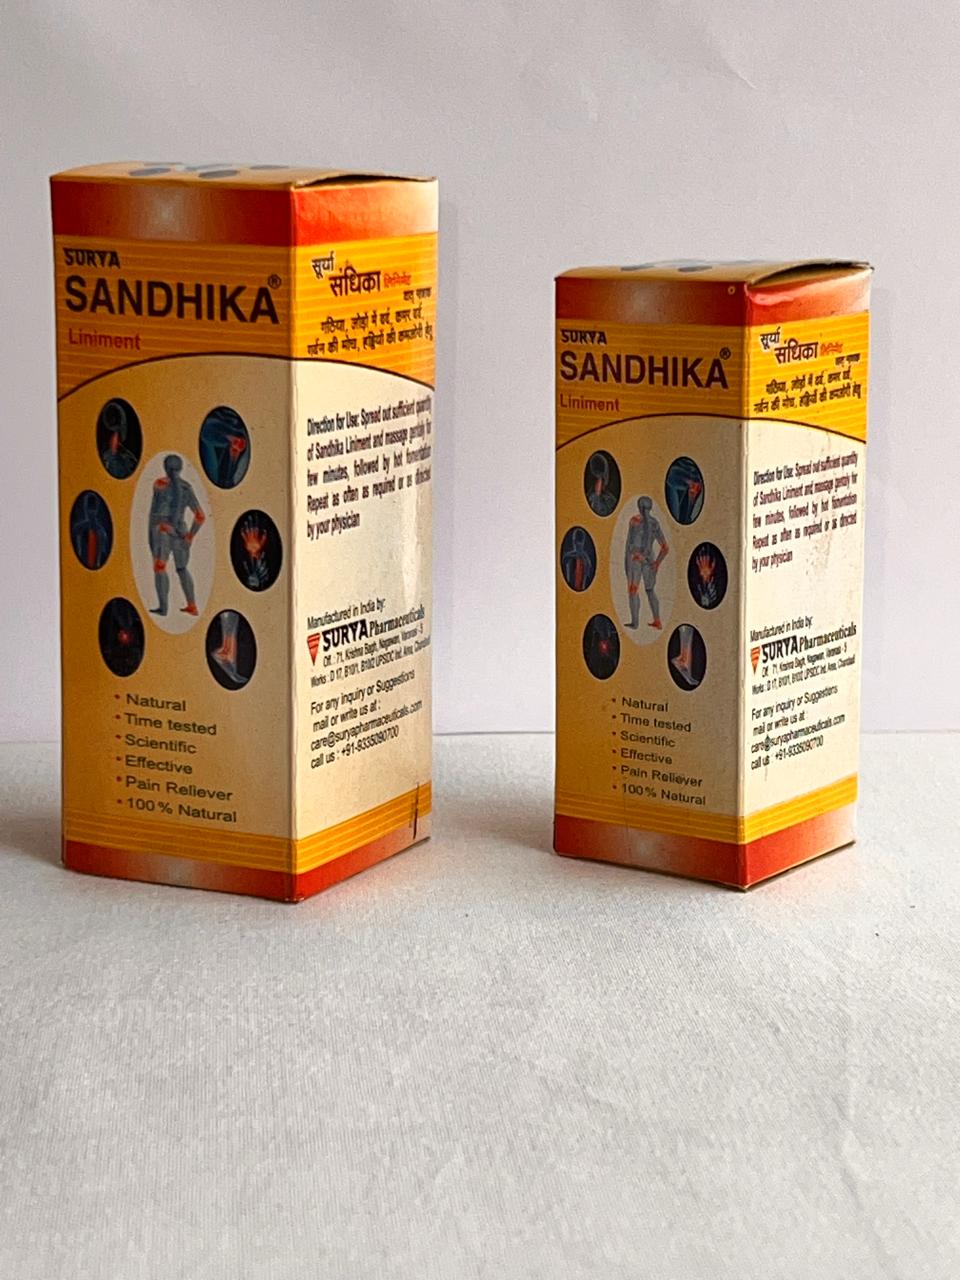 Sandhika oil